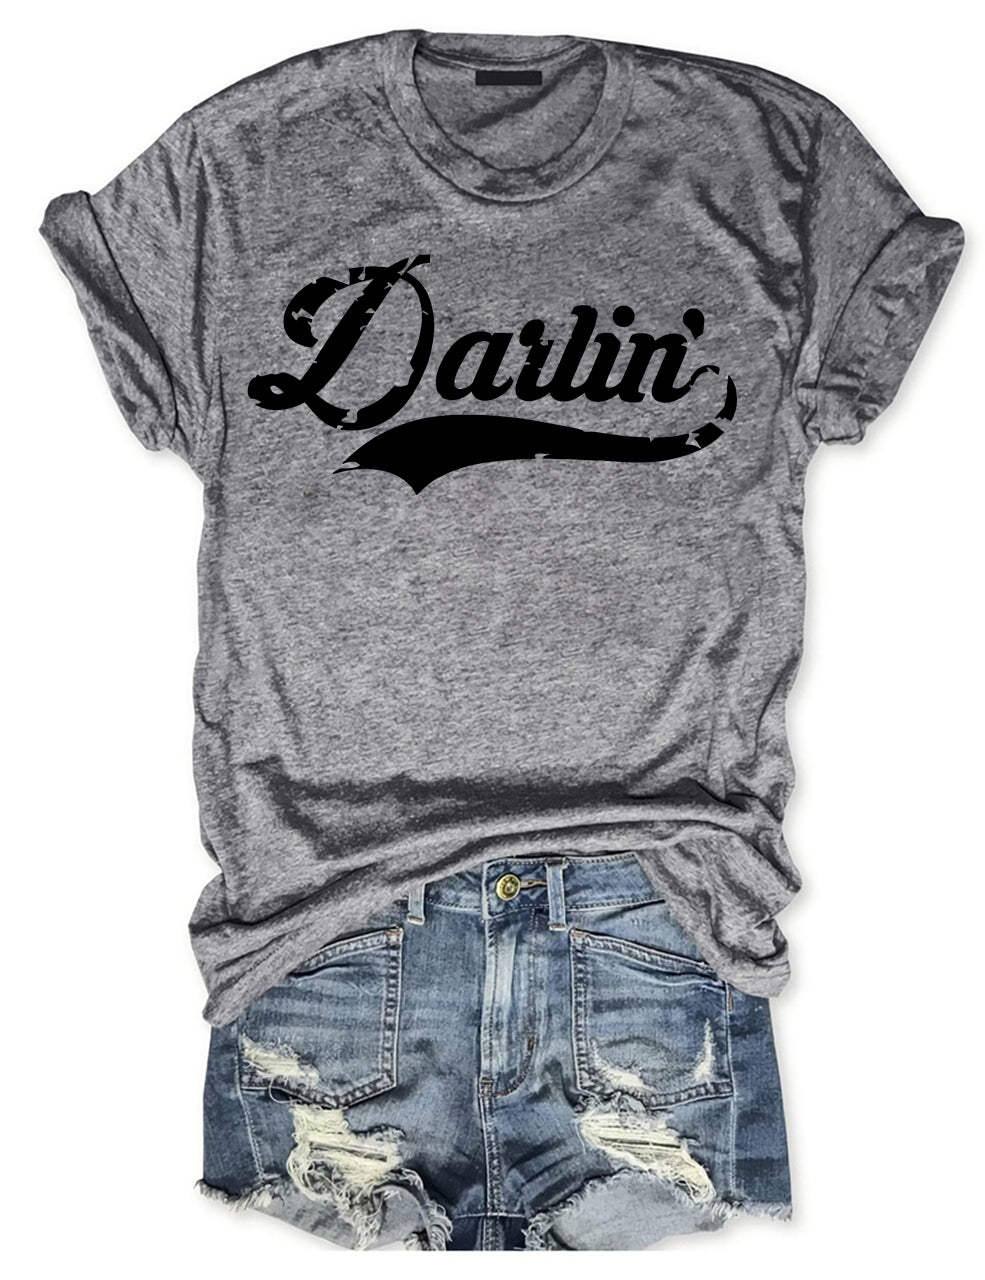 Darlin T-shirt